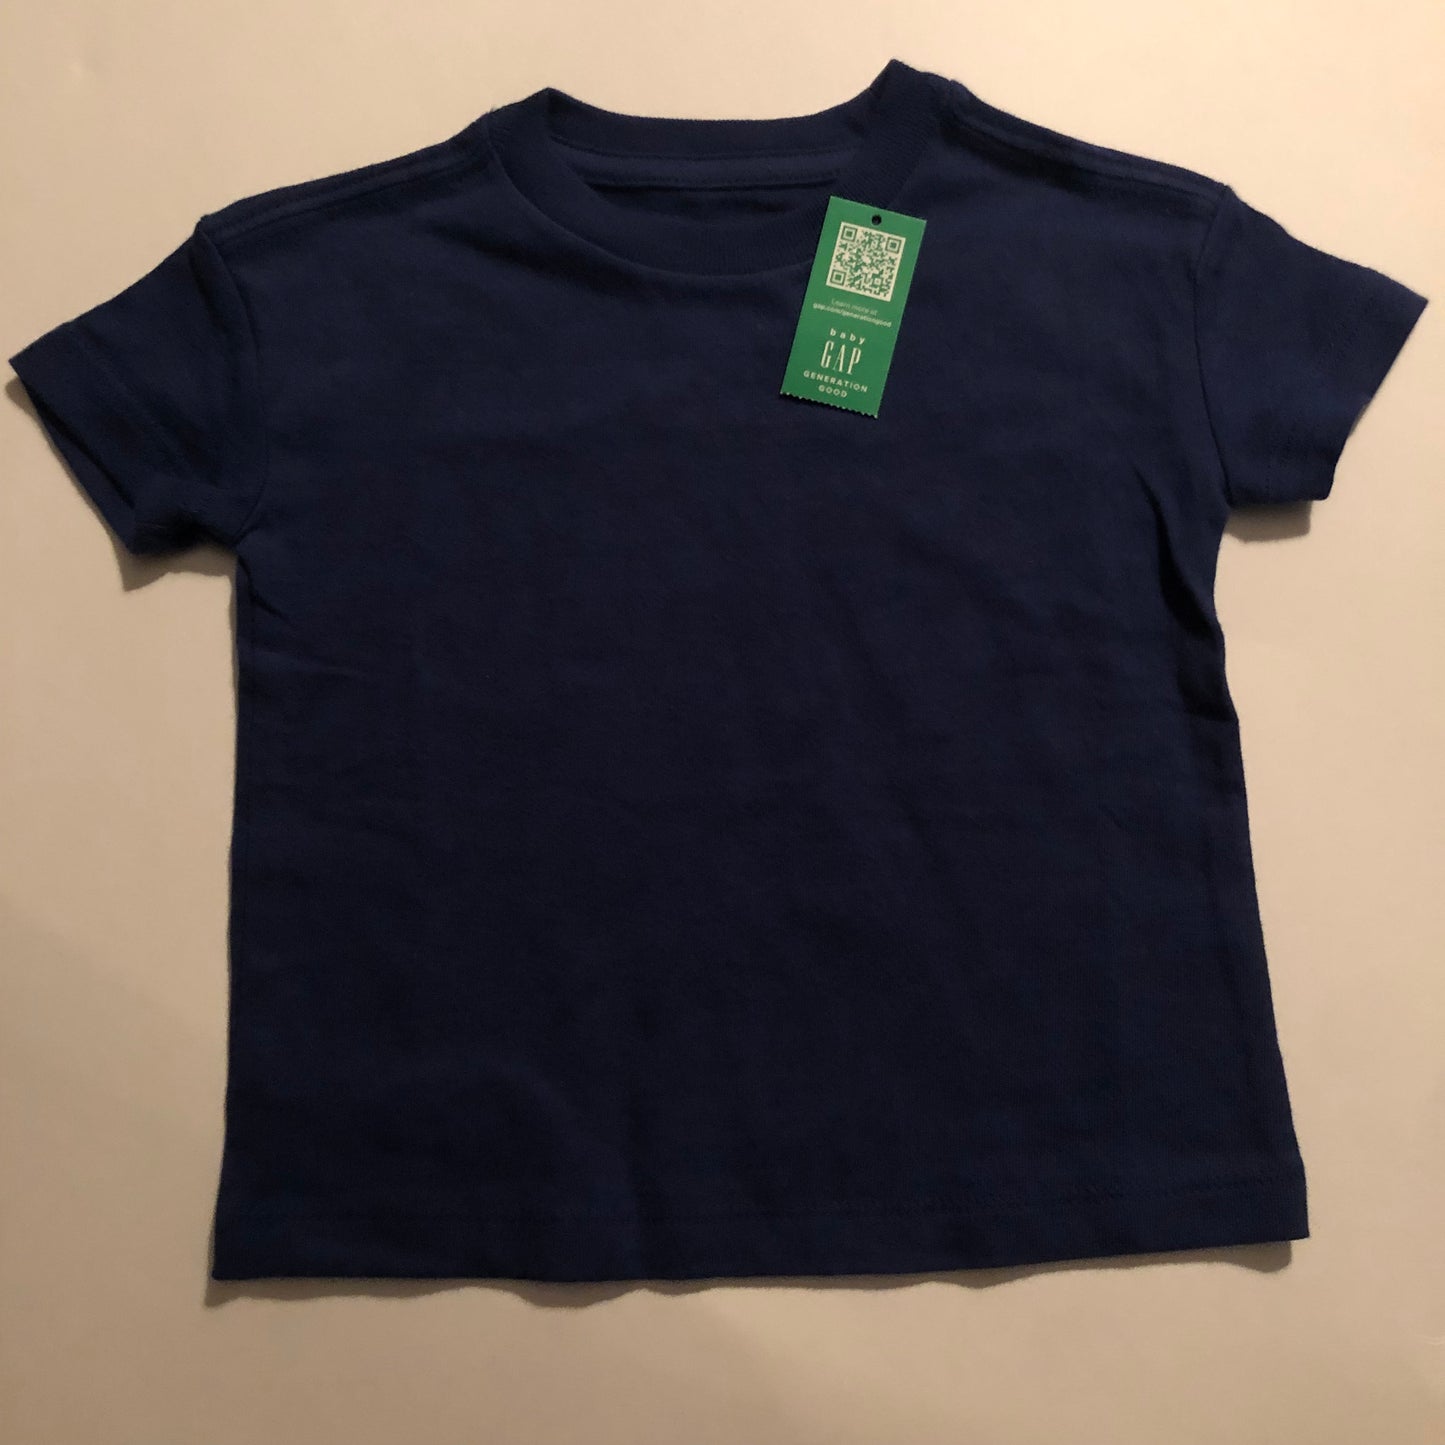 6-12m NWT Boys Baby Gap Generation Good Blue Shirt